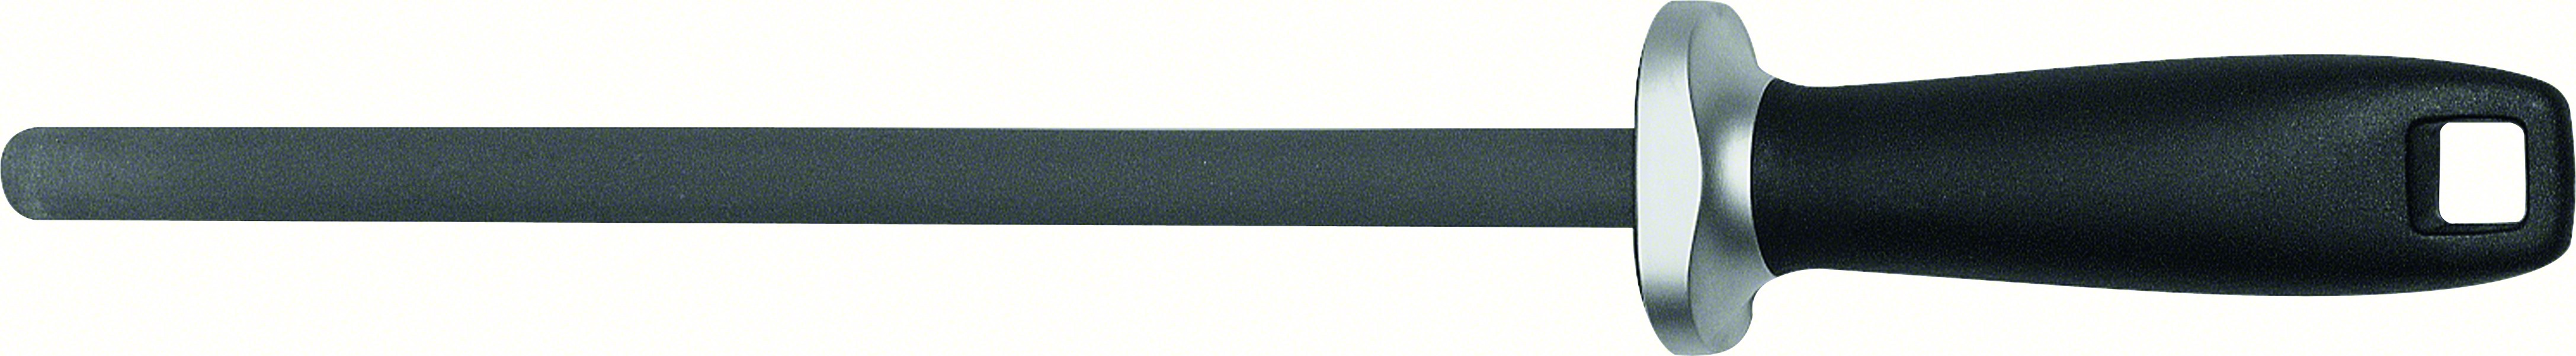 Ocílka keramická 23 cm, ZWILLING 32513-231